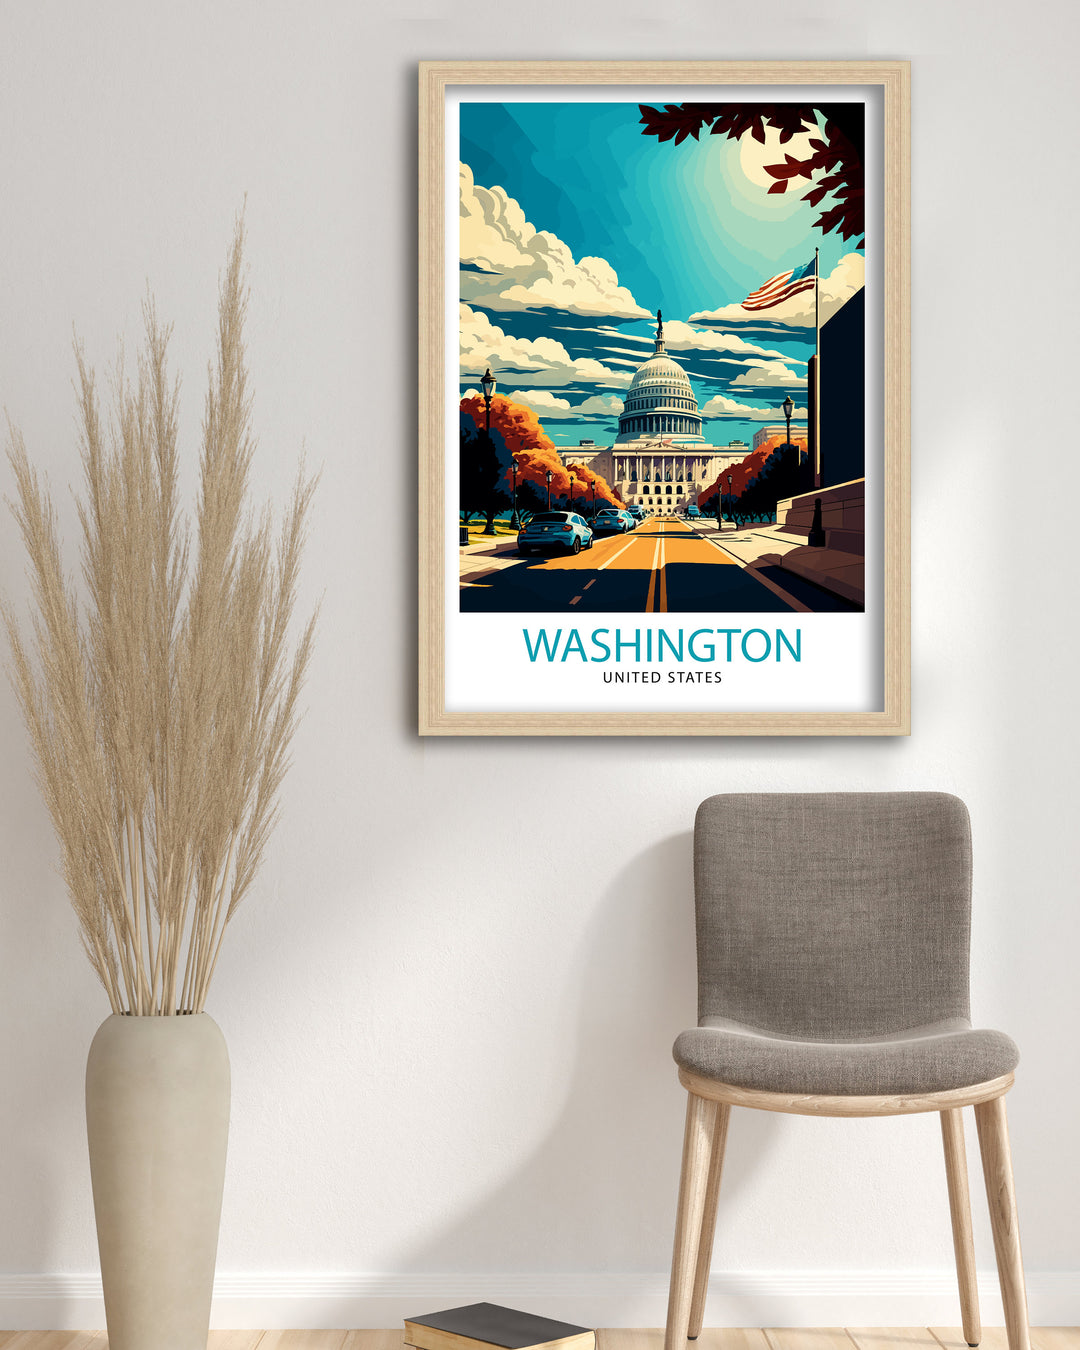 Washington D.C. Travel Poster Washington Wall Art USA Travel Poster Washington Home Decor Washington Illustration Gift for Travelers